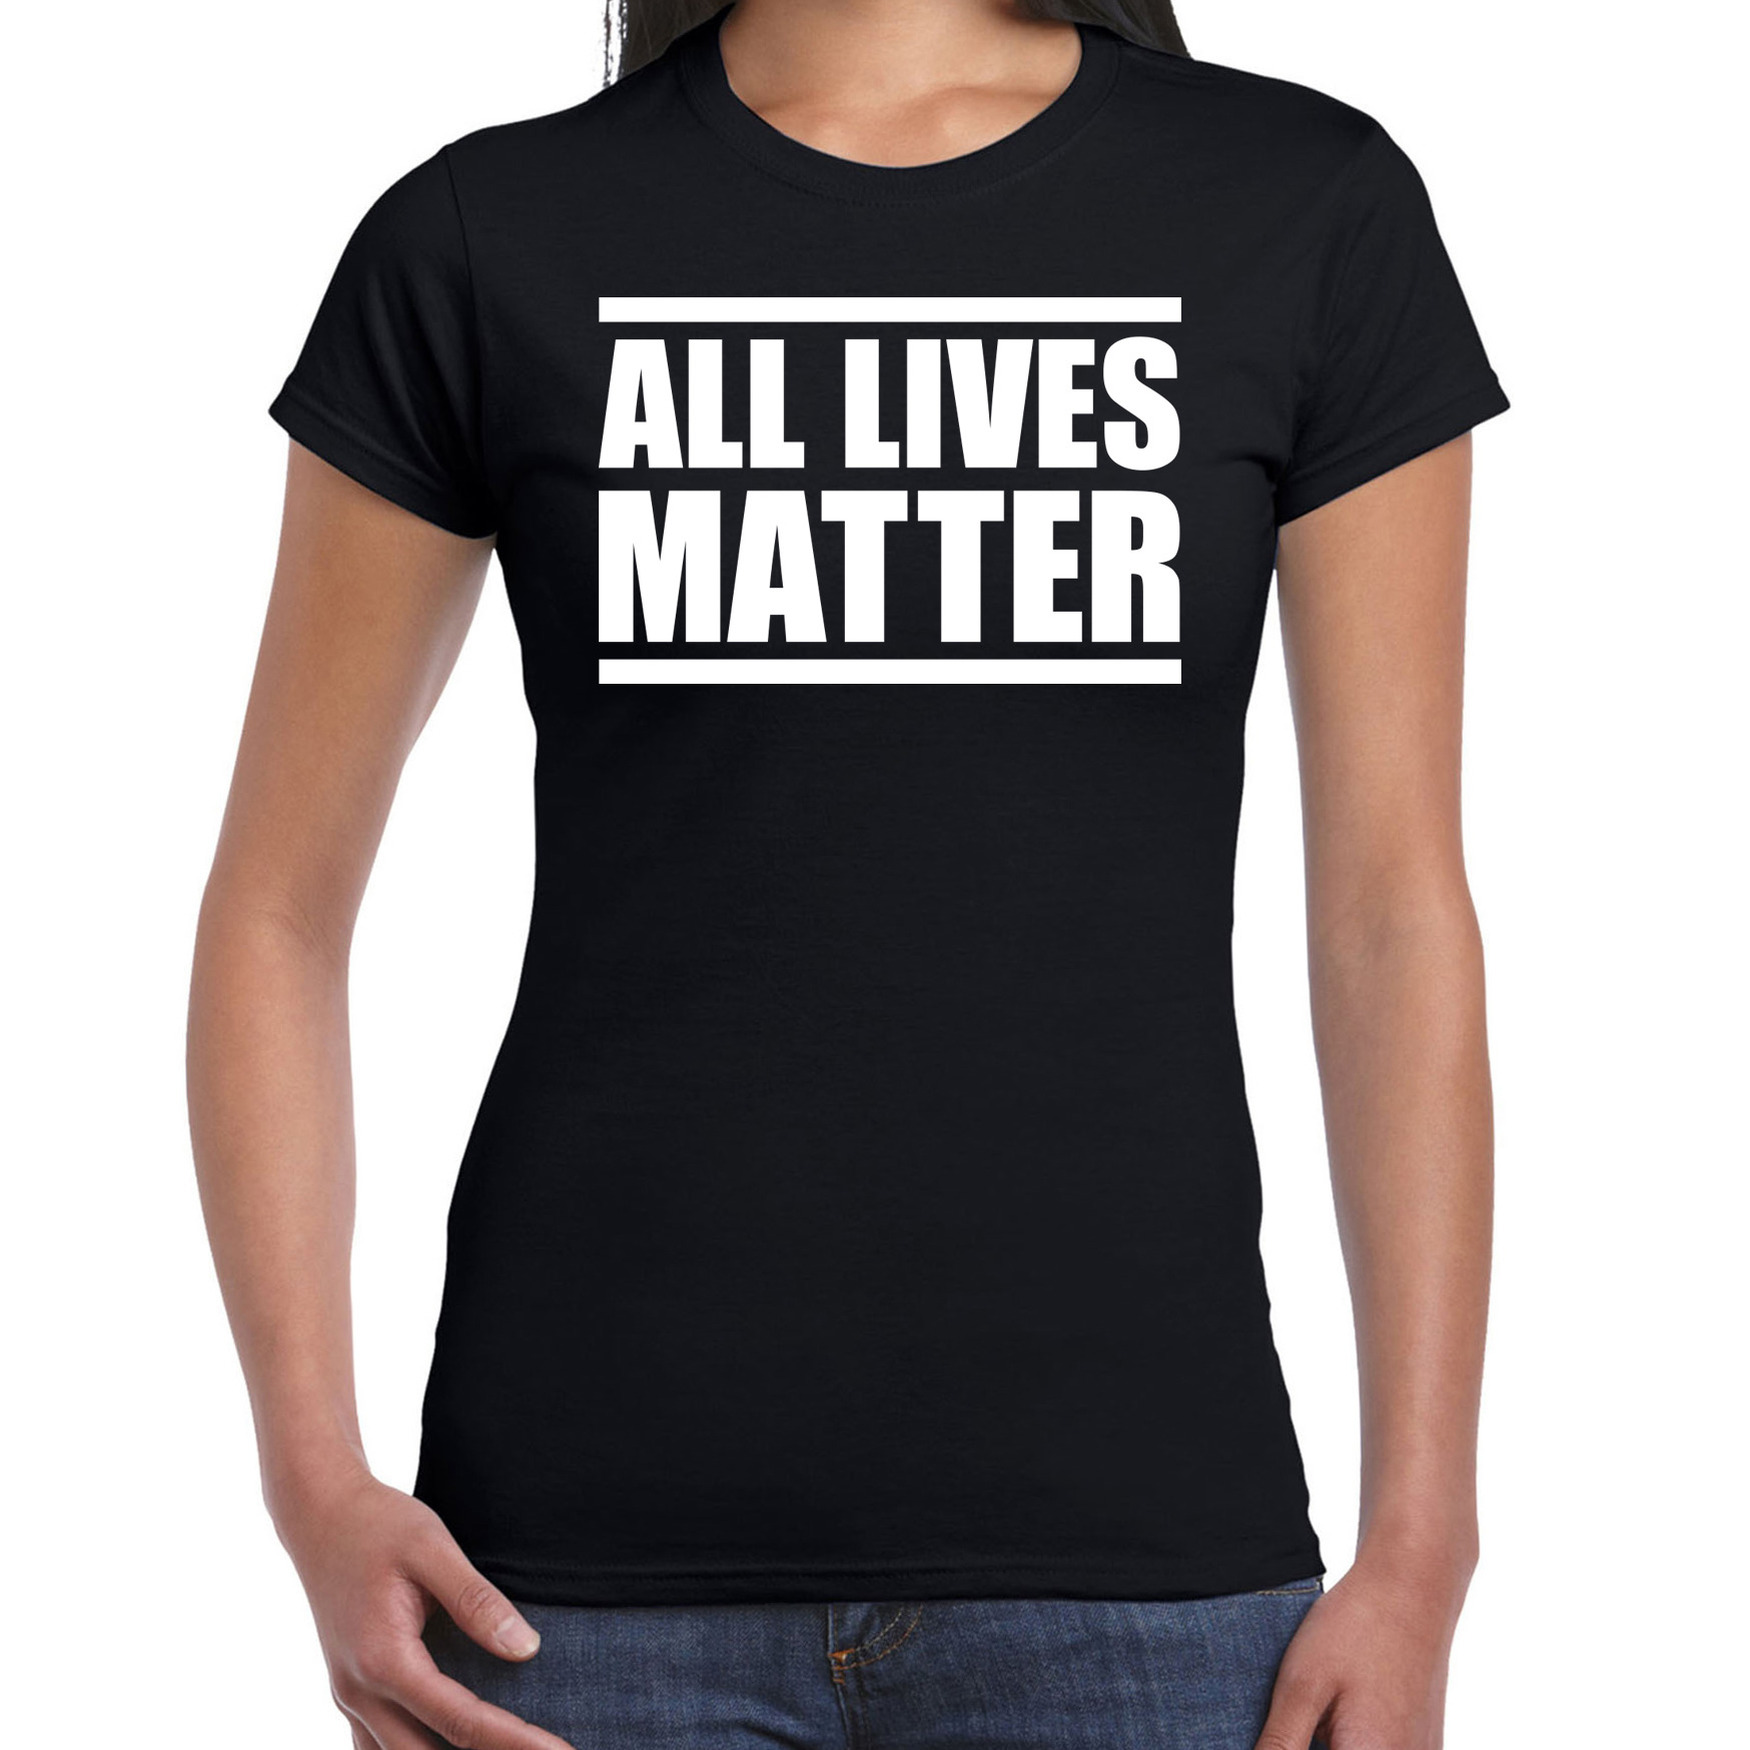 All lives matter demonstratie-protest t-shirt zwart voor dames